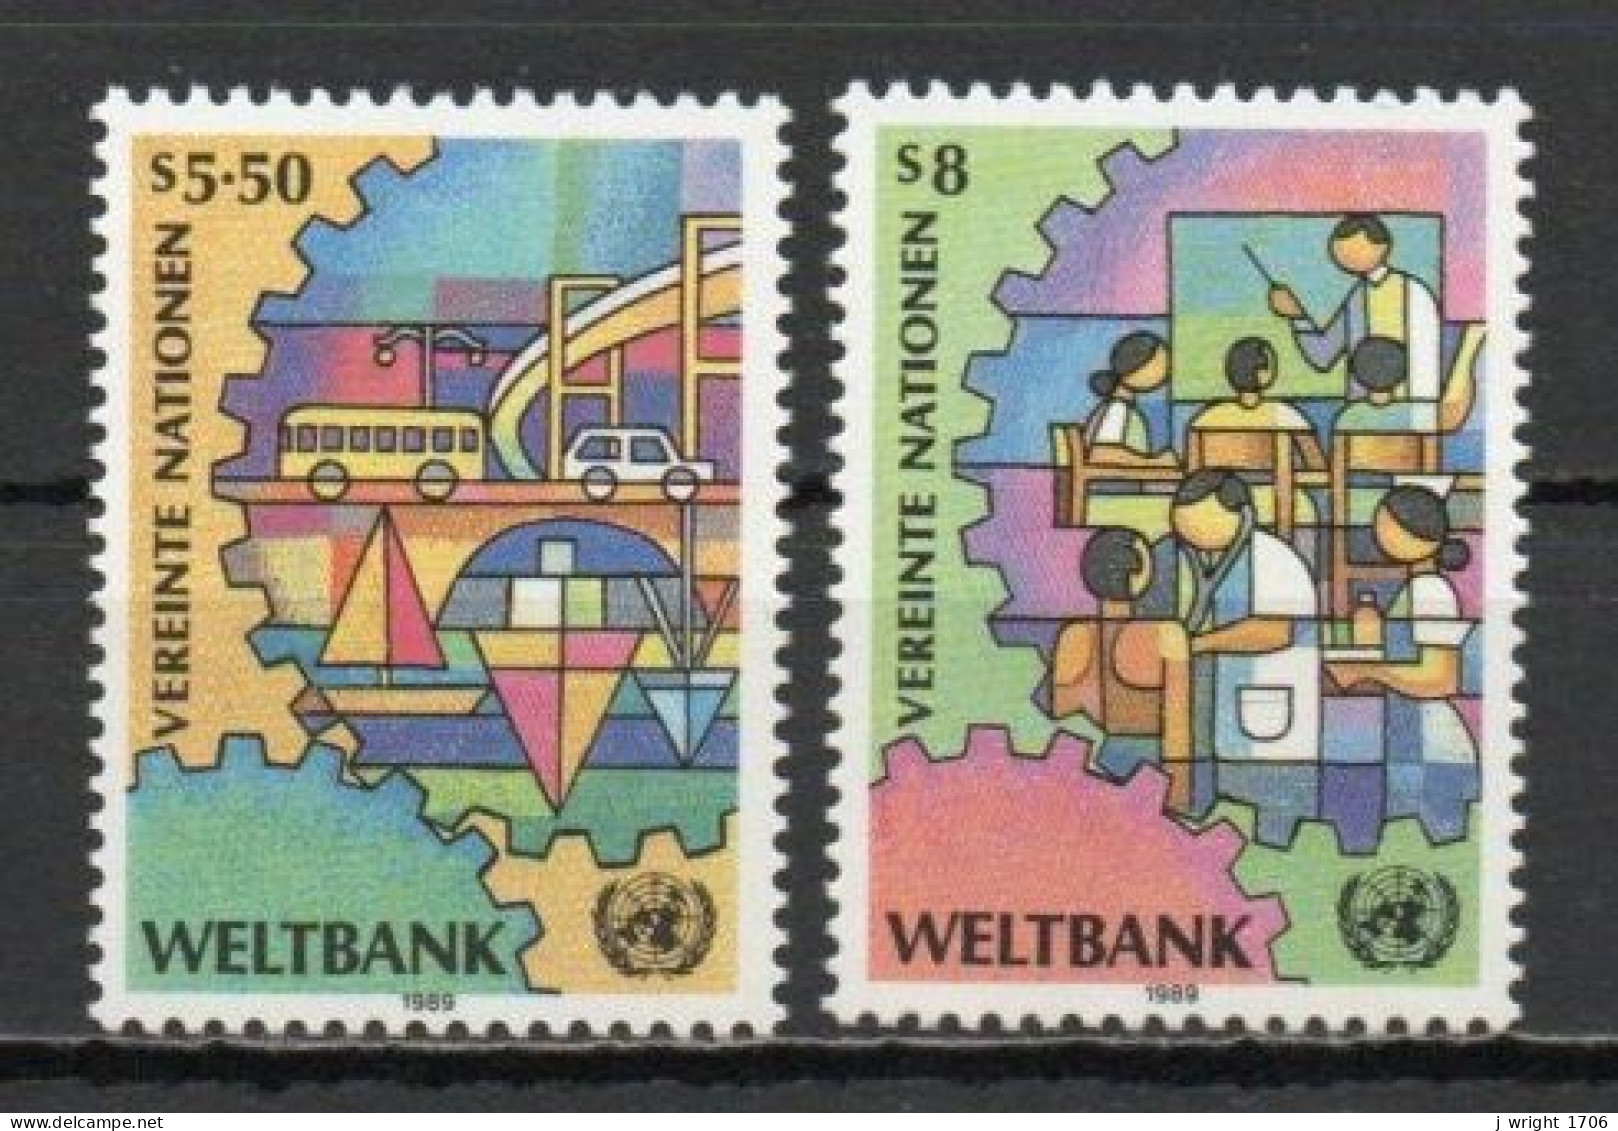 UN/Vienna, 1989, World Bank, Set, MNH - Unused Stamps